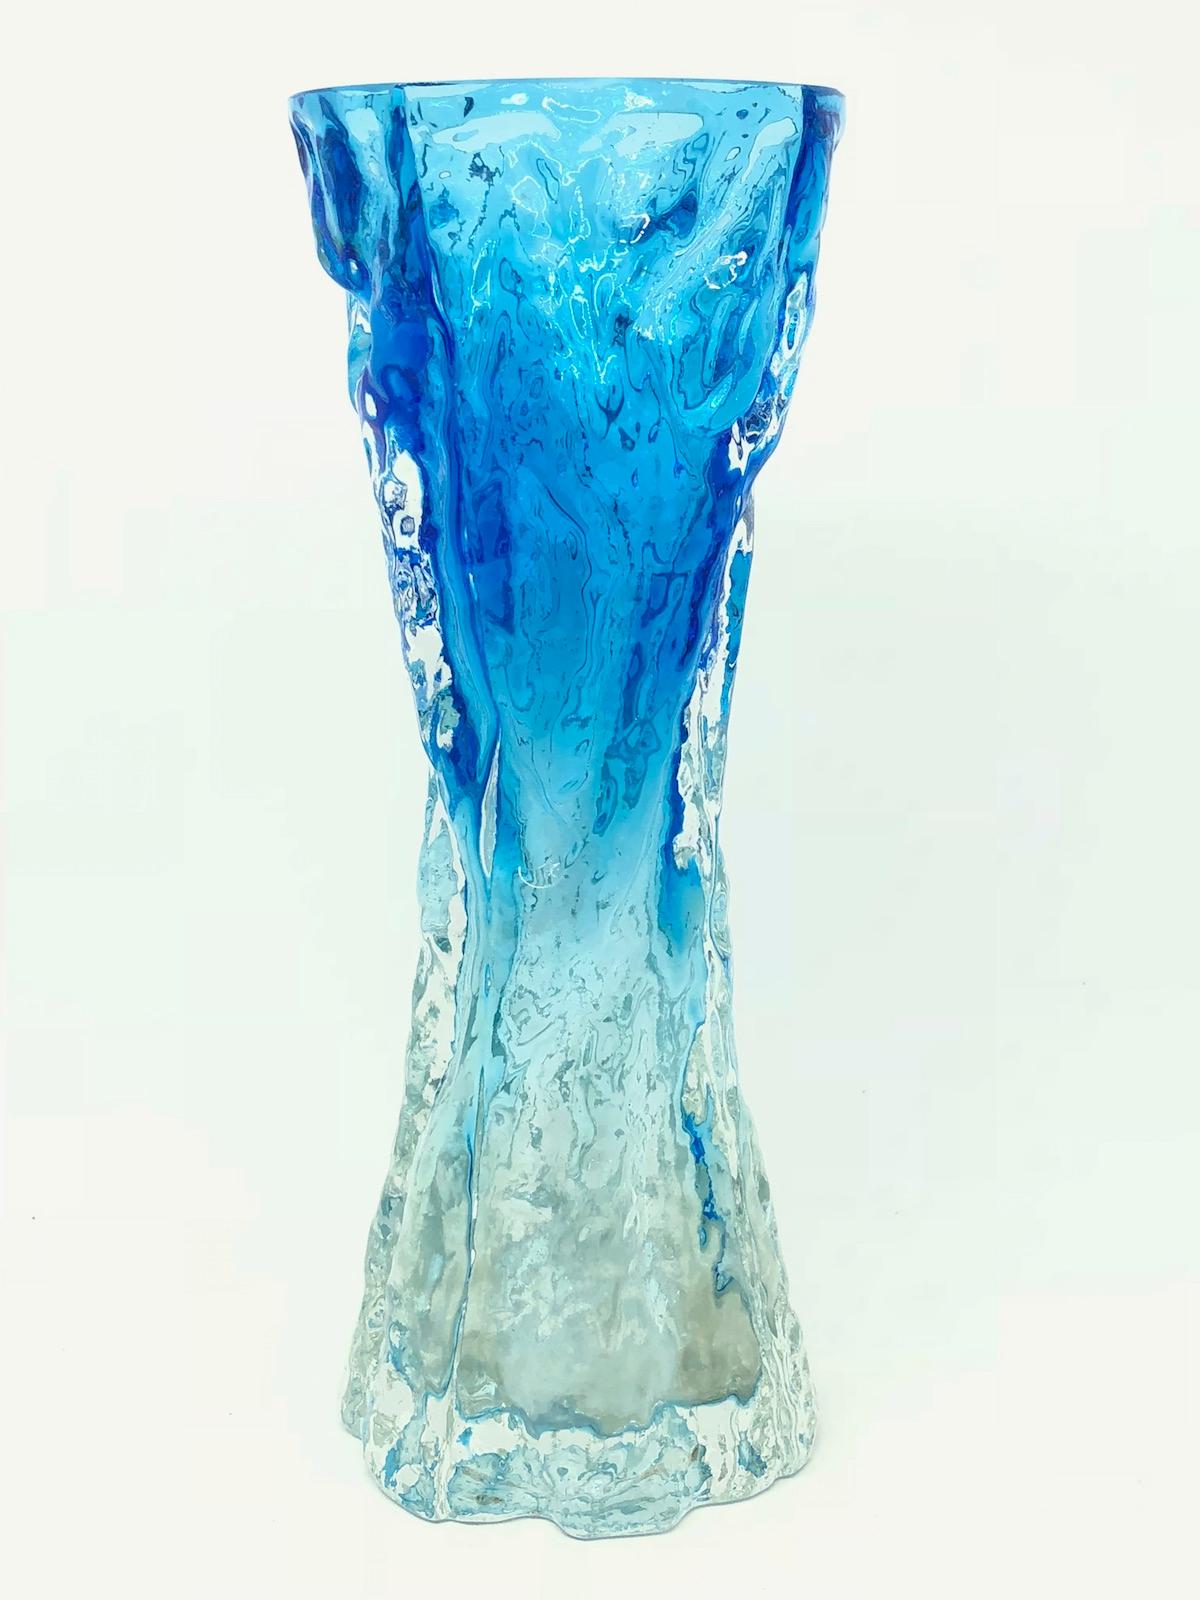 Mid-Century Modern Vintage German Vibrant Blue Glass Tree Bark Vase by Ingrid Glas, circa 1970s For Sale